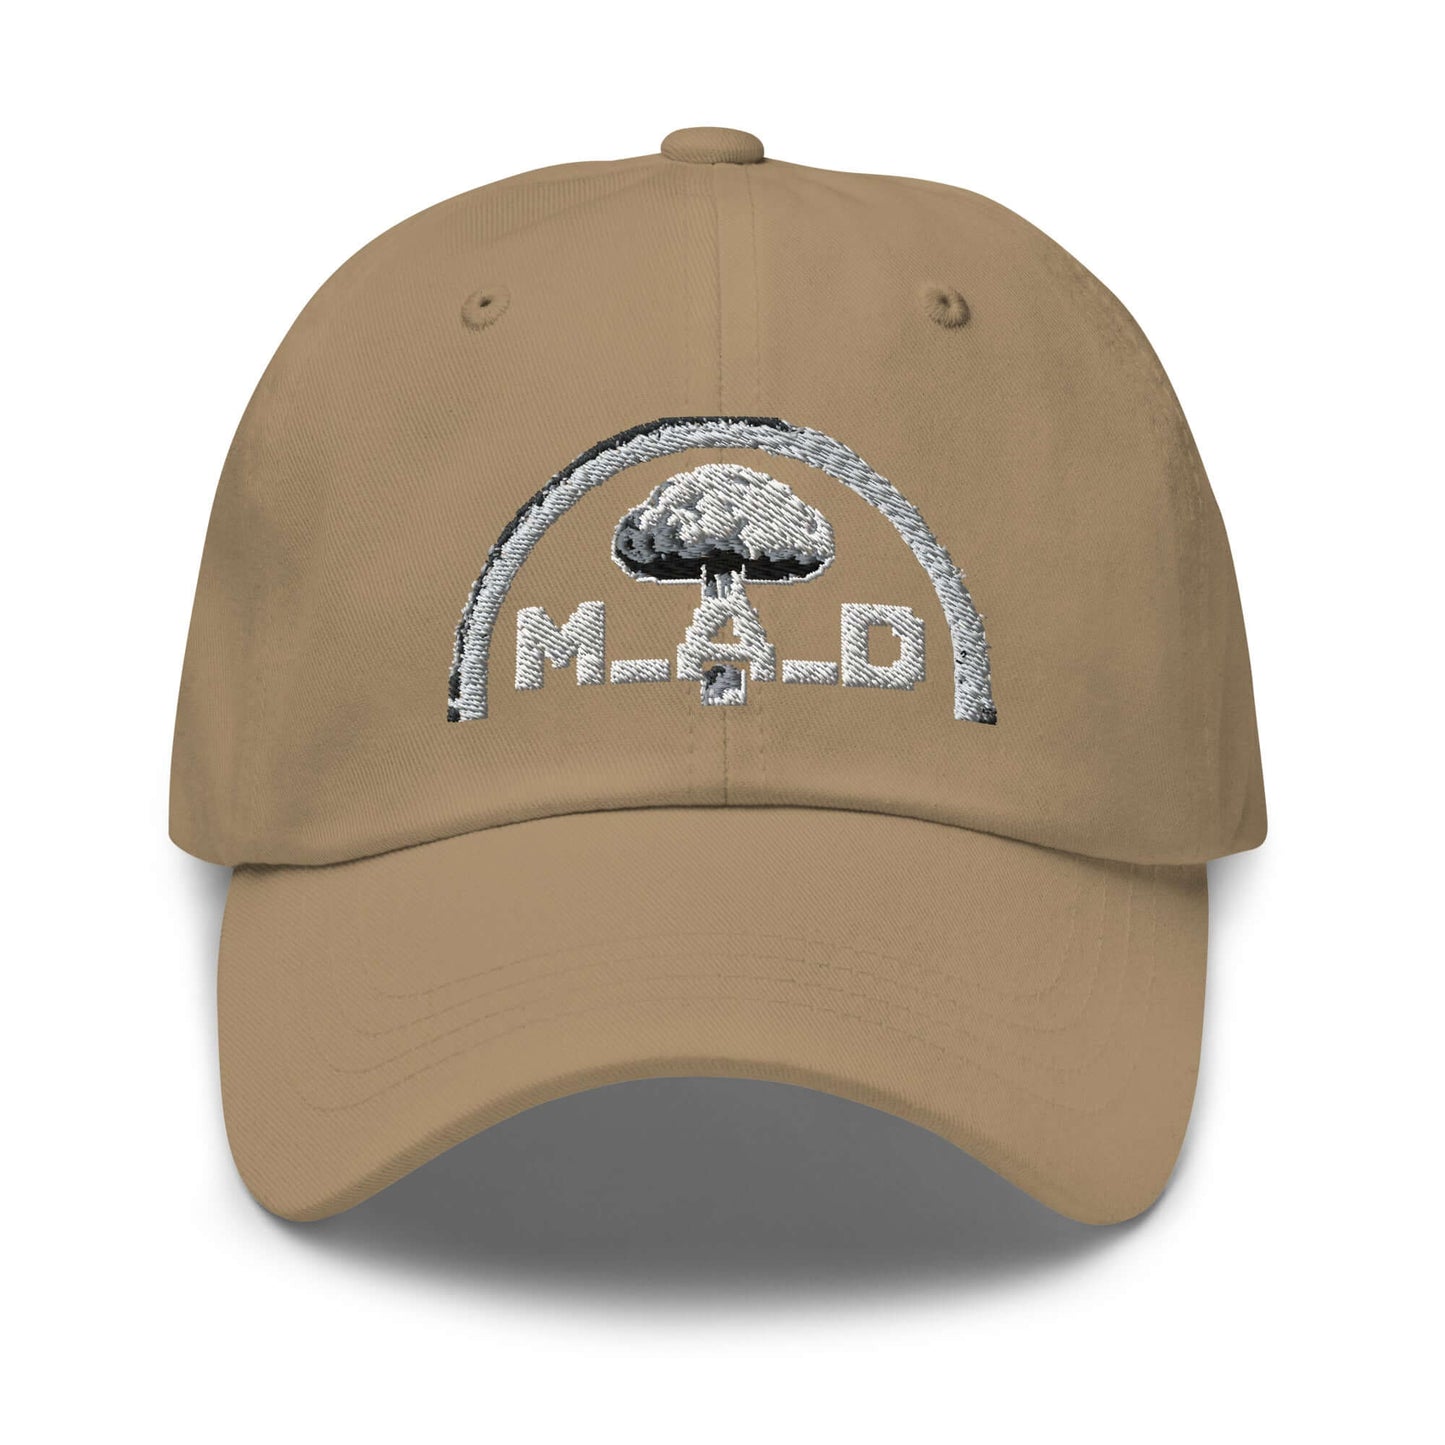 Premium M.A.D. Logo Cap